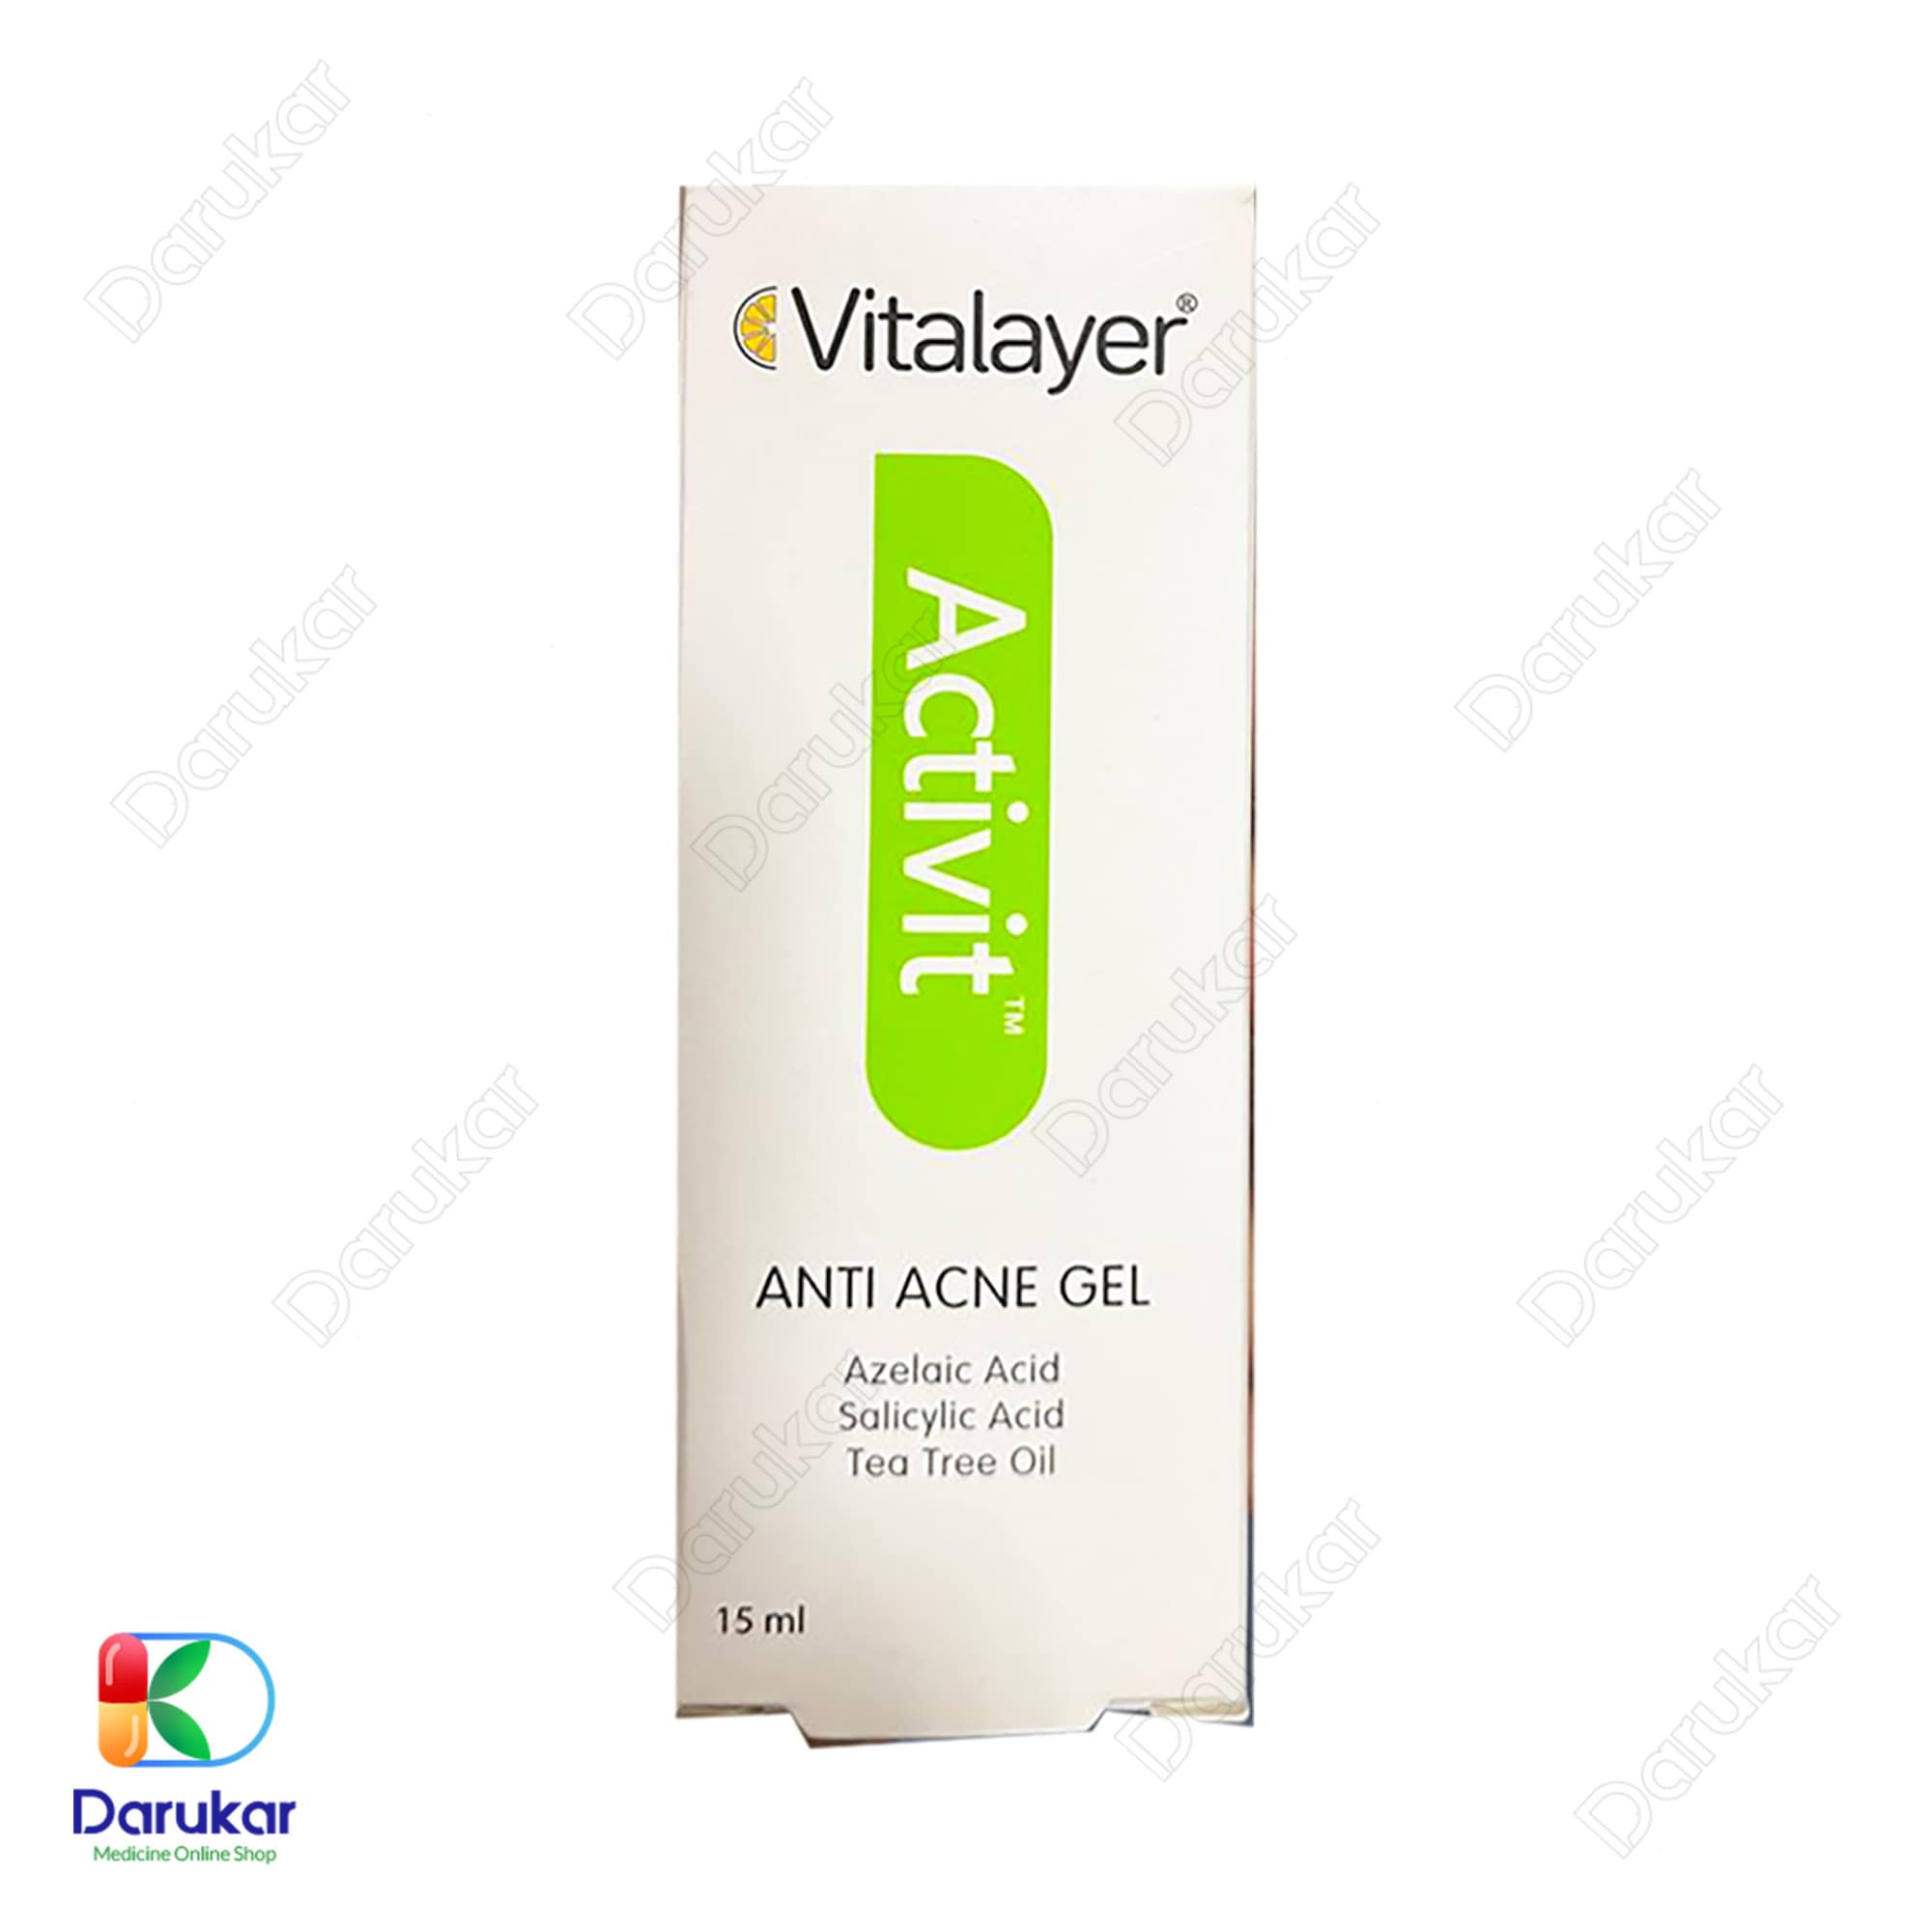 Vitalayer Activit Anti Acne Gel 15 ml 2 1